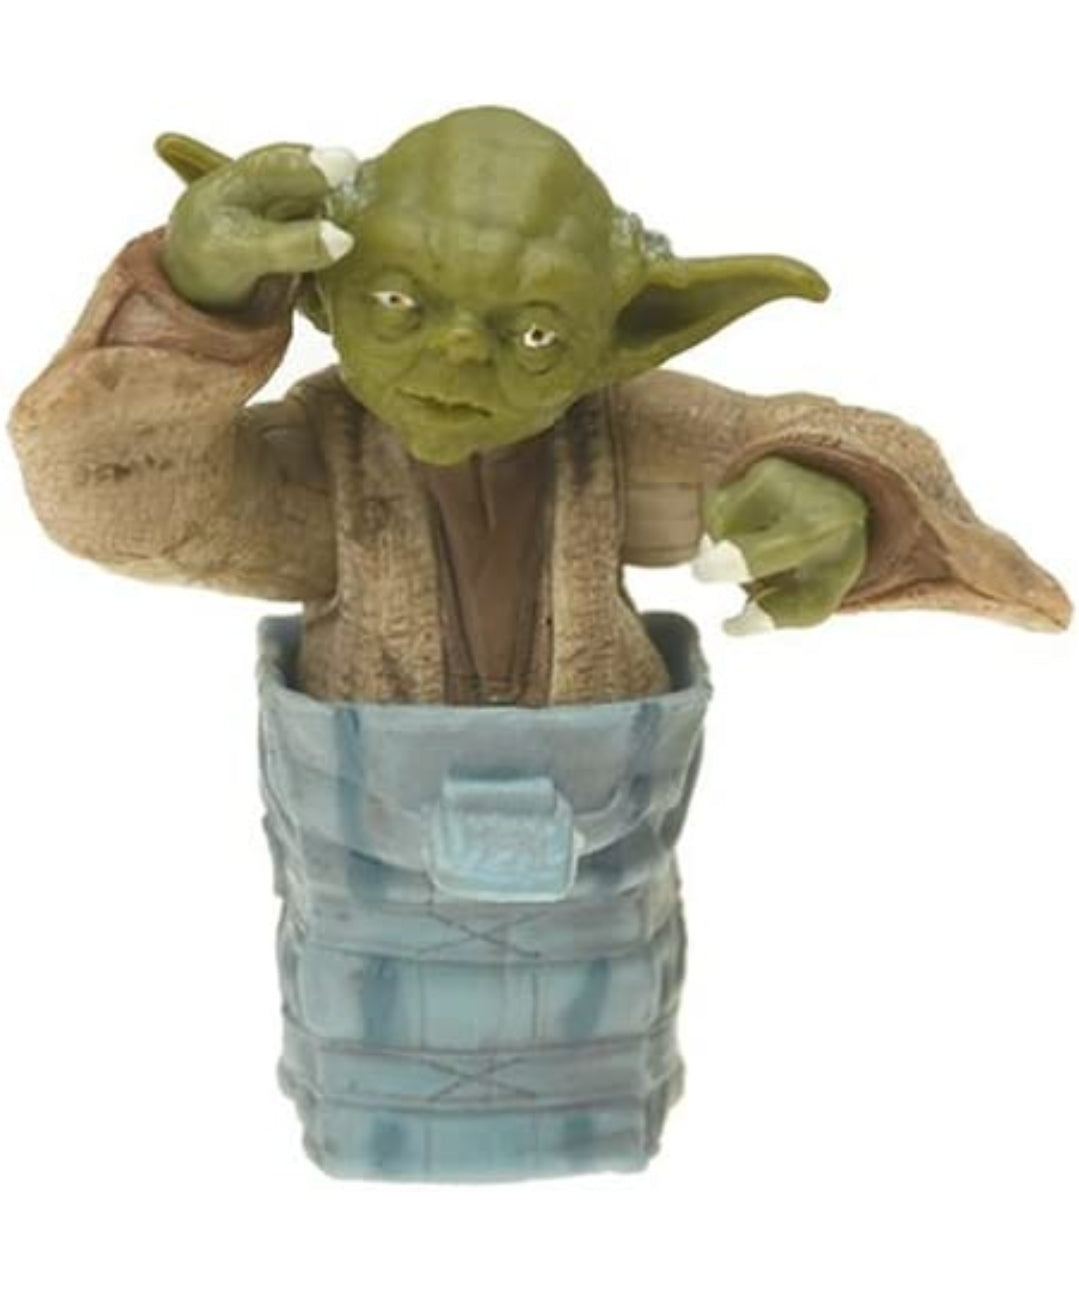 New *Star Wars: Original Trilogy Collection "Yoda" #2, 2004